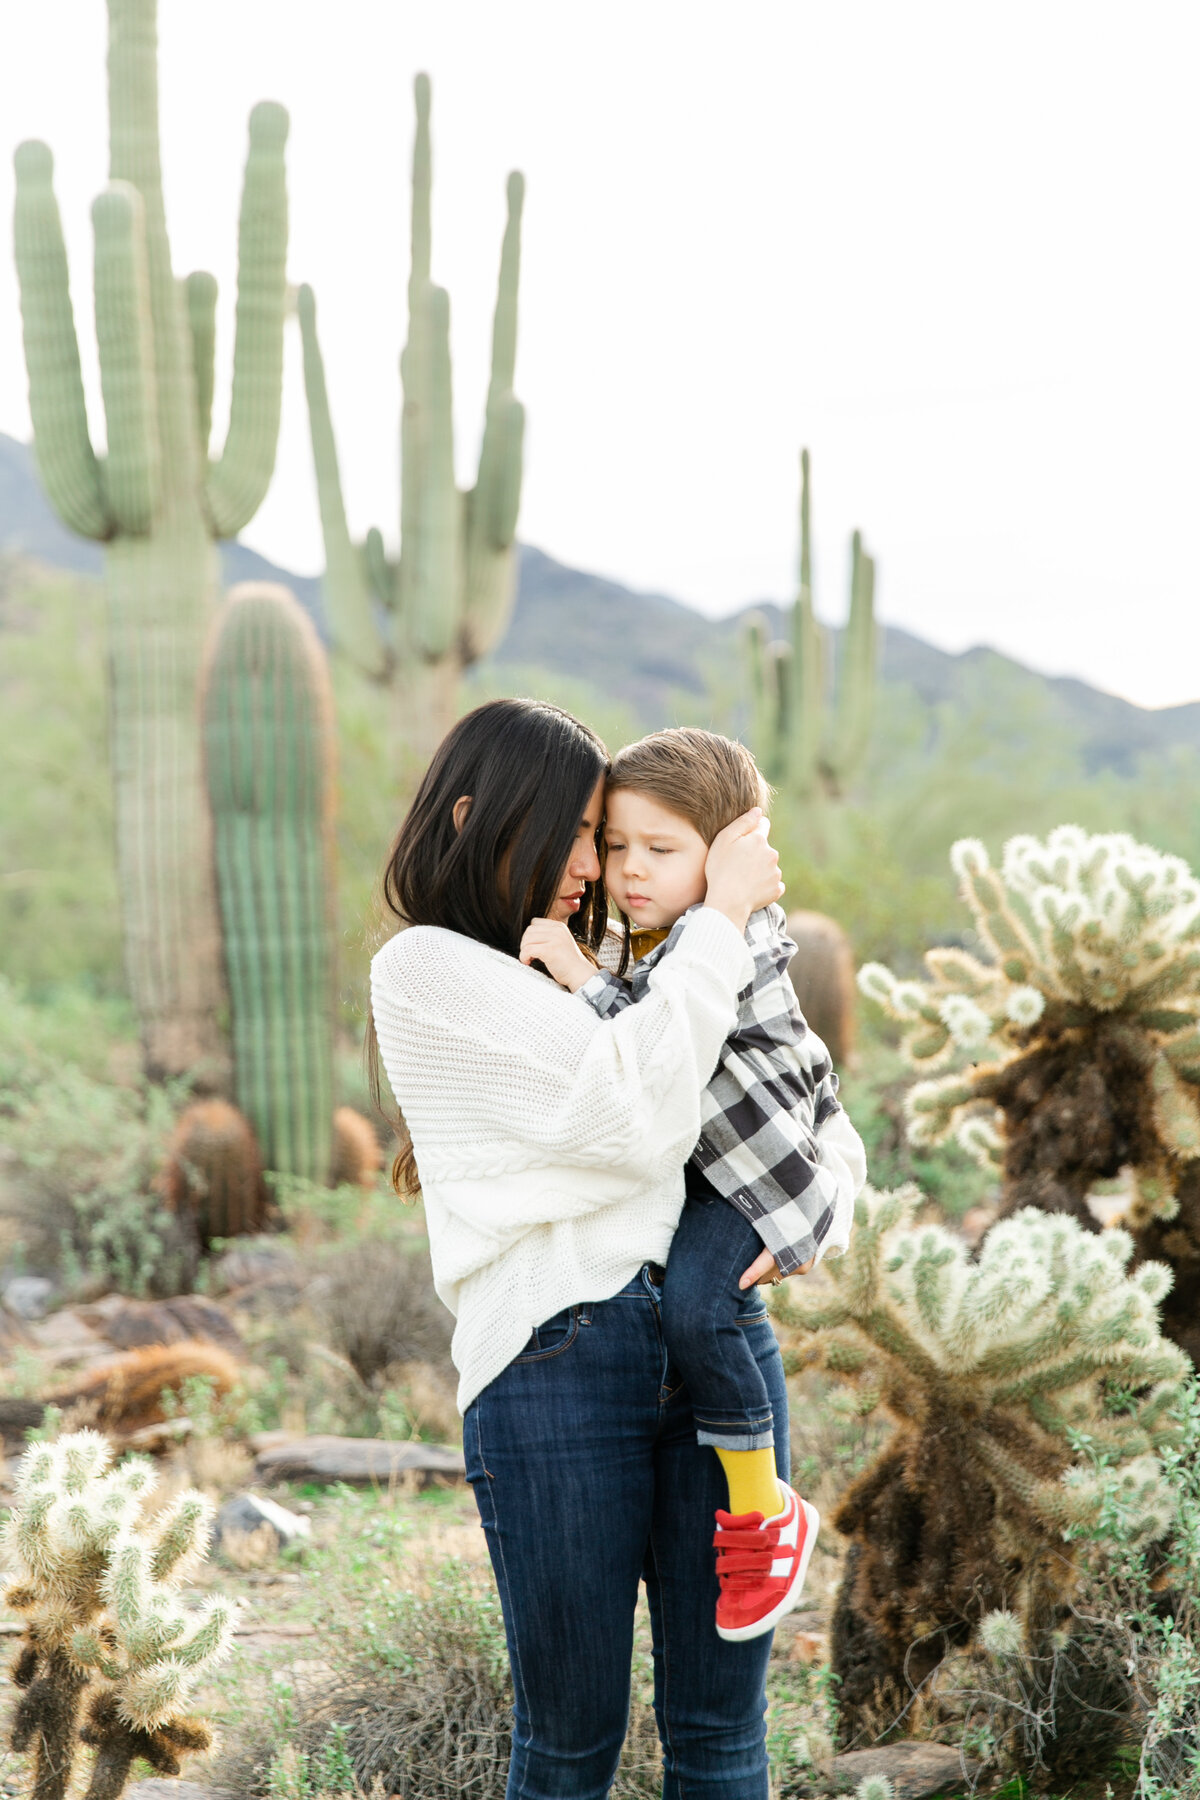 Karlie Colleen Photography - Scottsdale Arizona - Family portraits - Taylor & Family-45